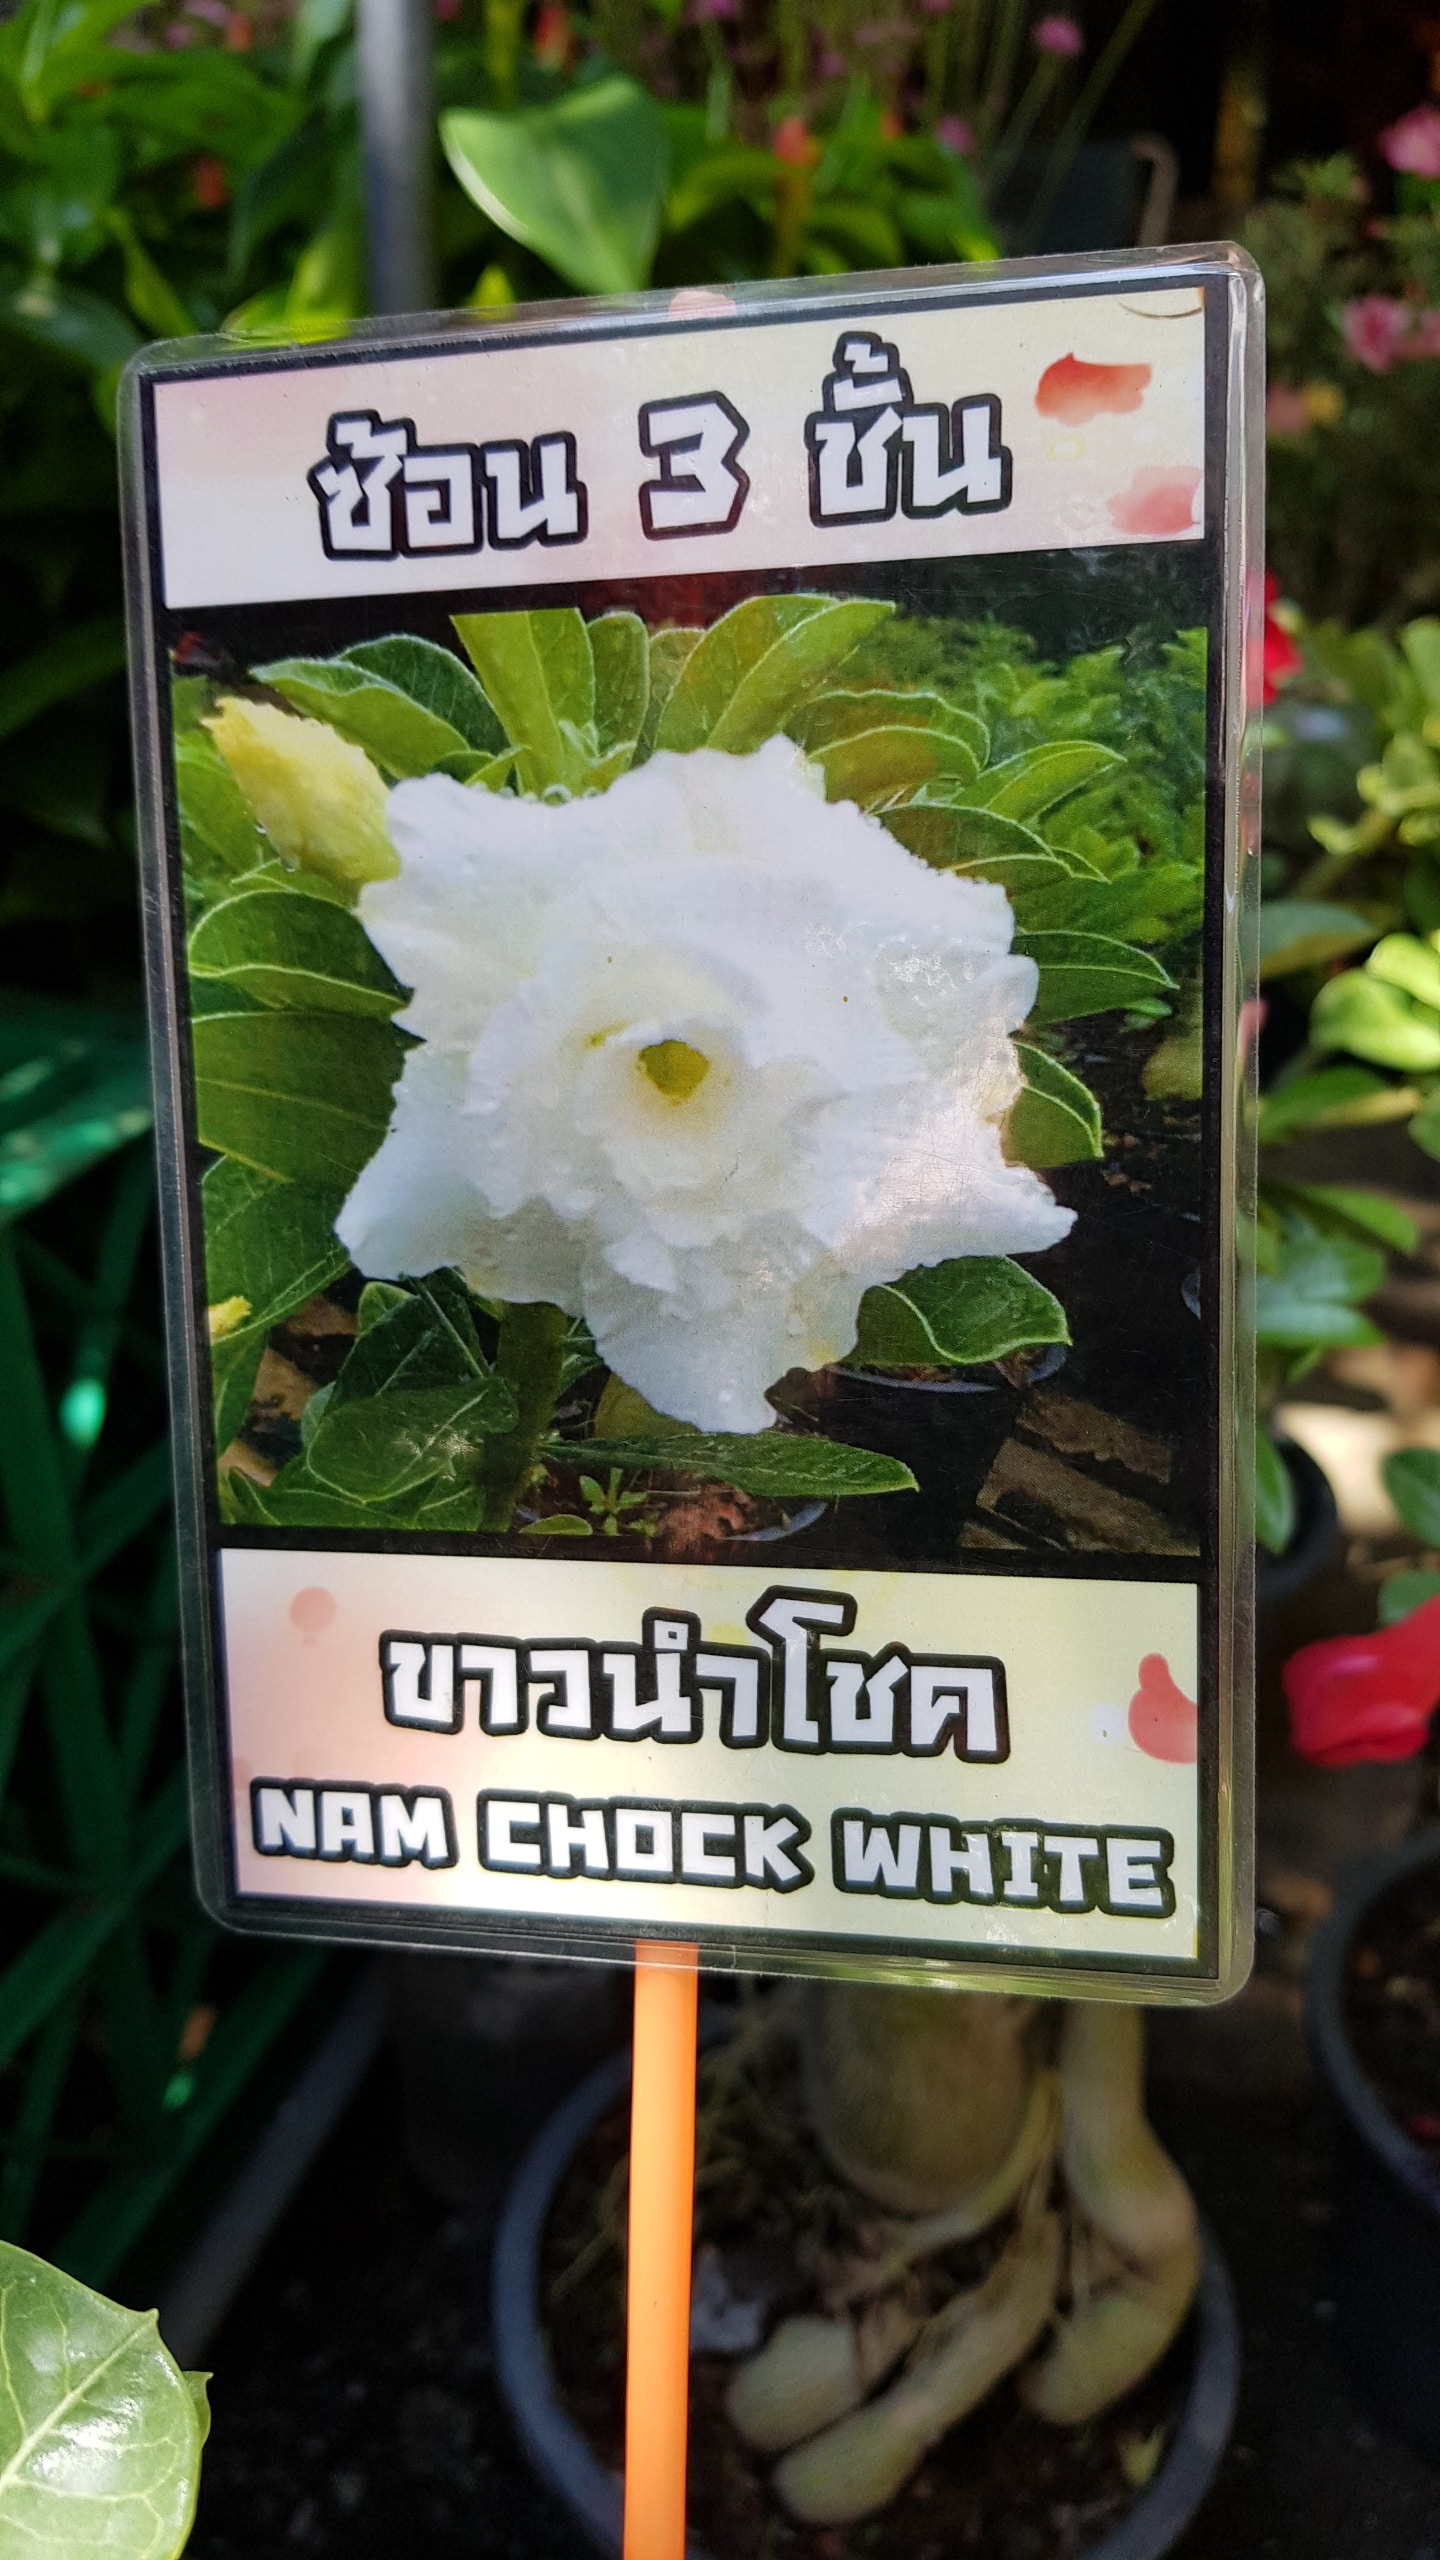 Adenium obessum 'Nam Chock White'